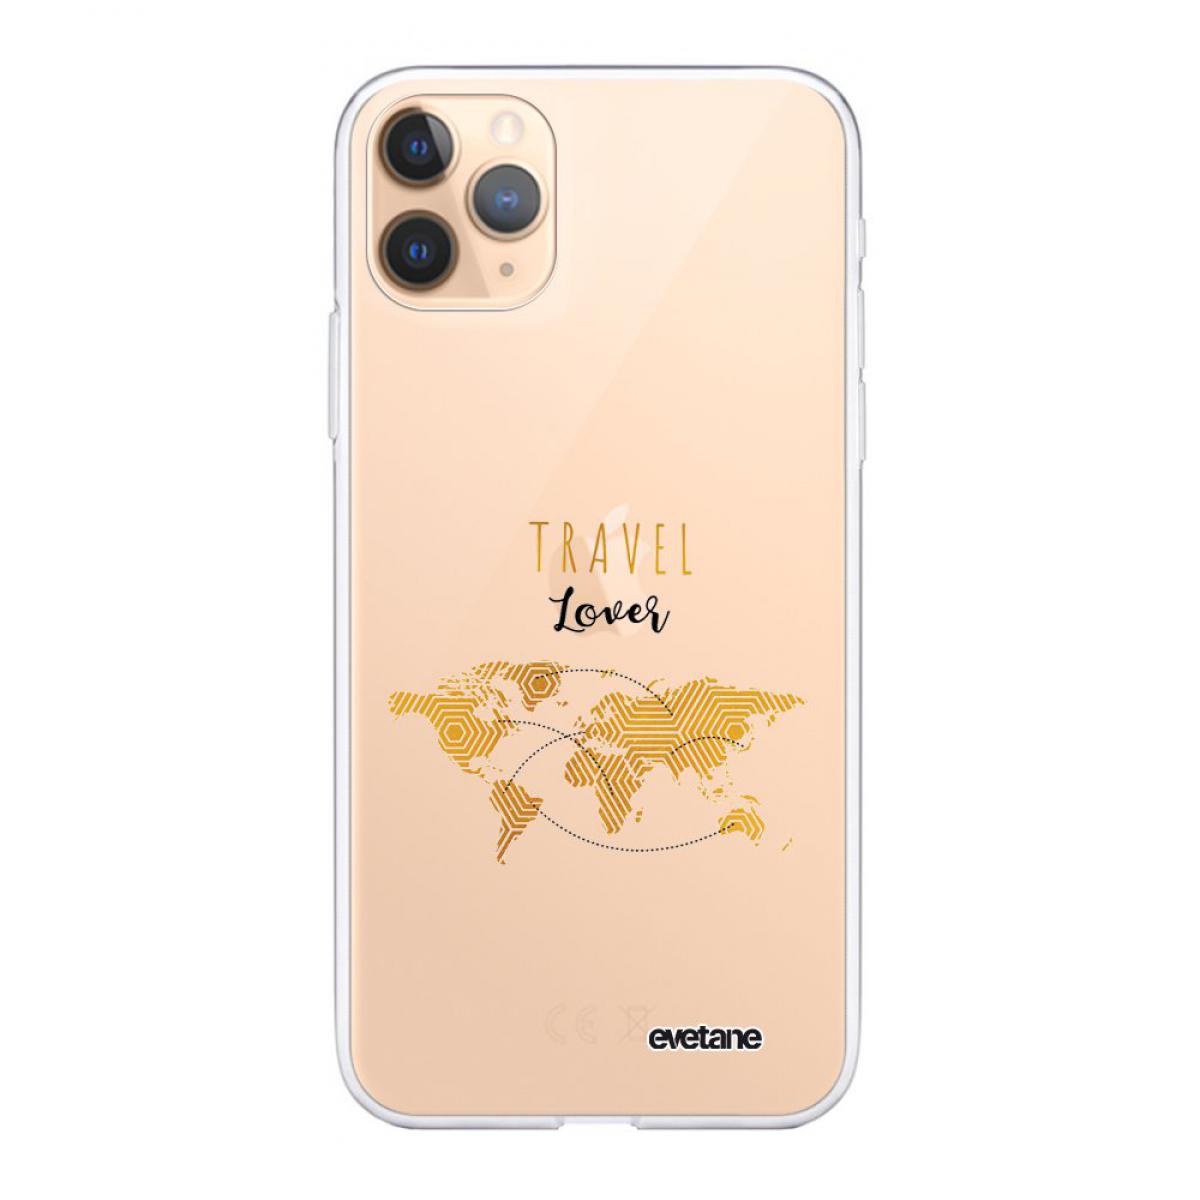 Evetane - Coque iPhone 11 Pro souple transparente Travel Lover Motif Ecriture Tendance Evetane - Coque, étui smartphone